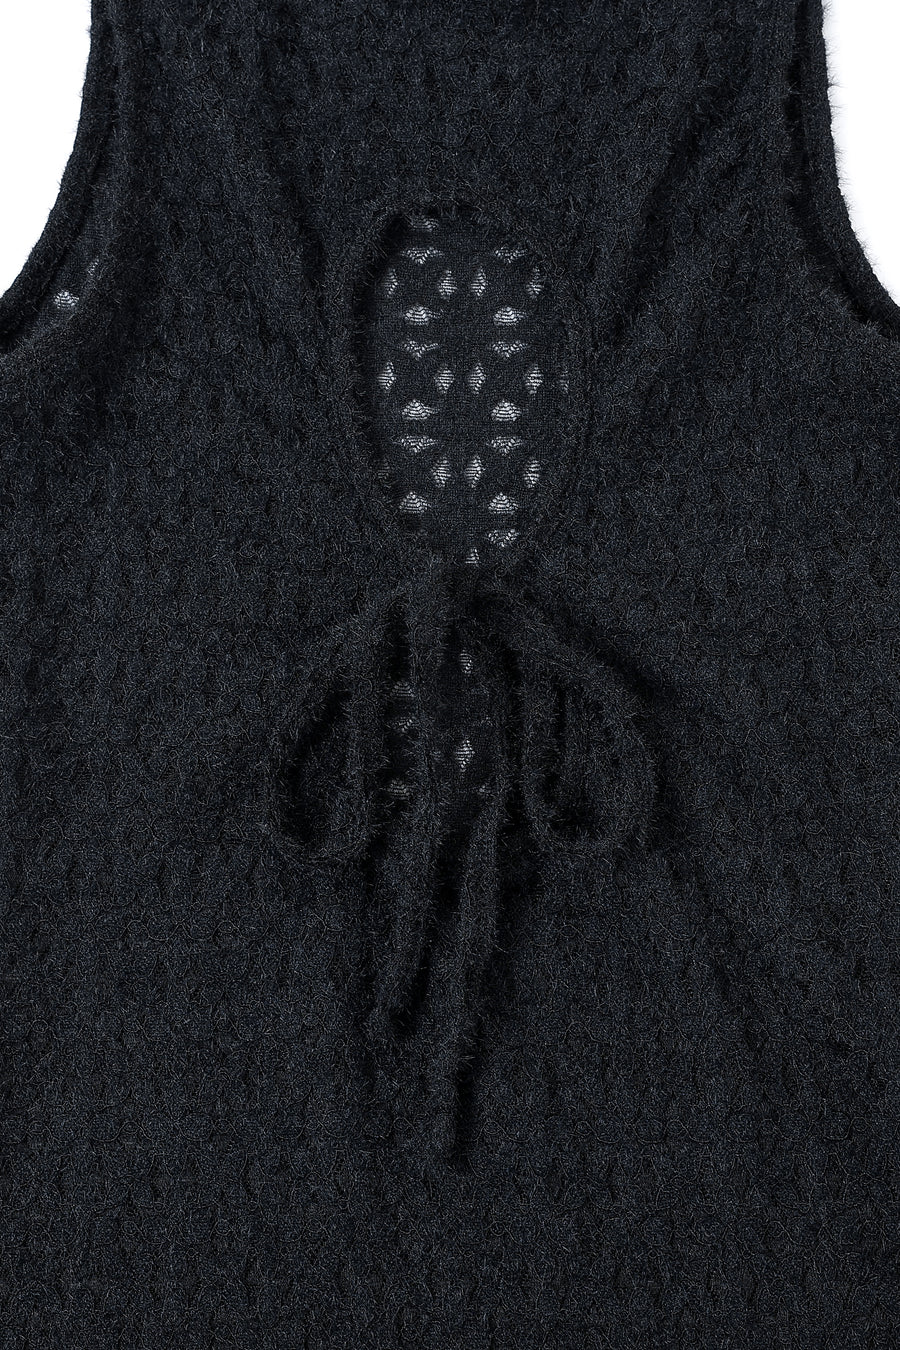 Hole-y Black Lace Midi Dress